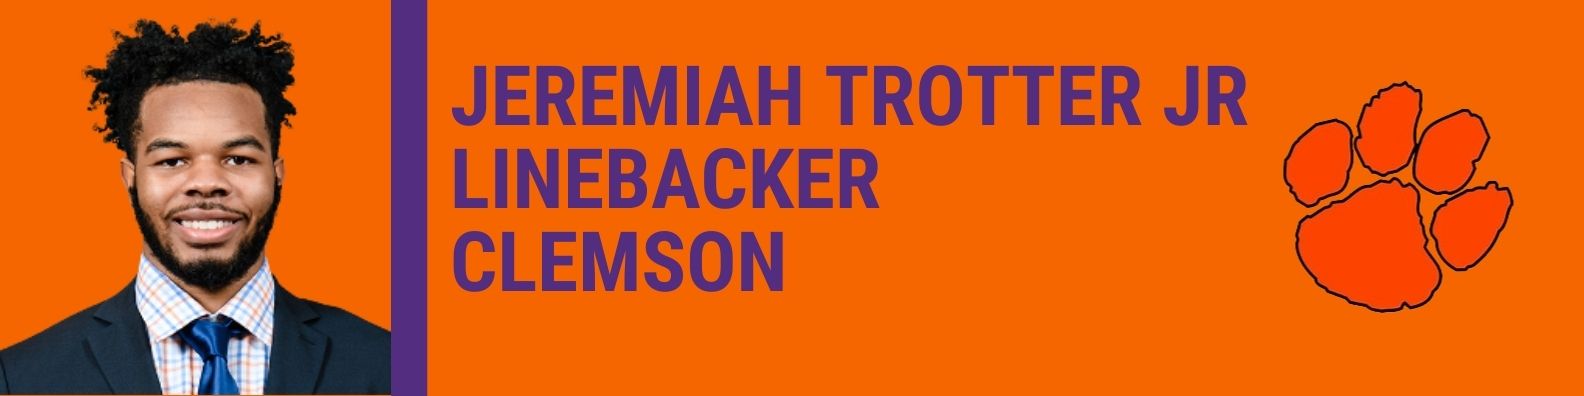 Jeremiah trotter Jr, Clemson